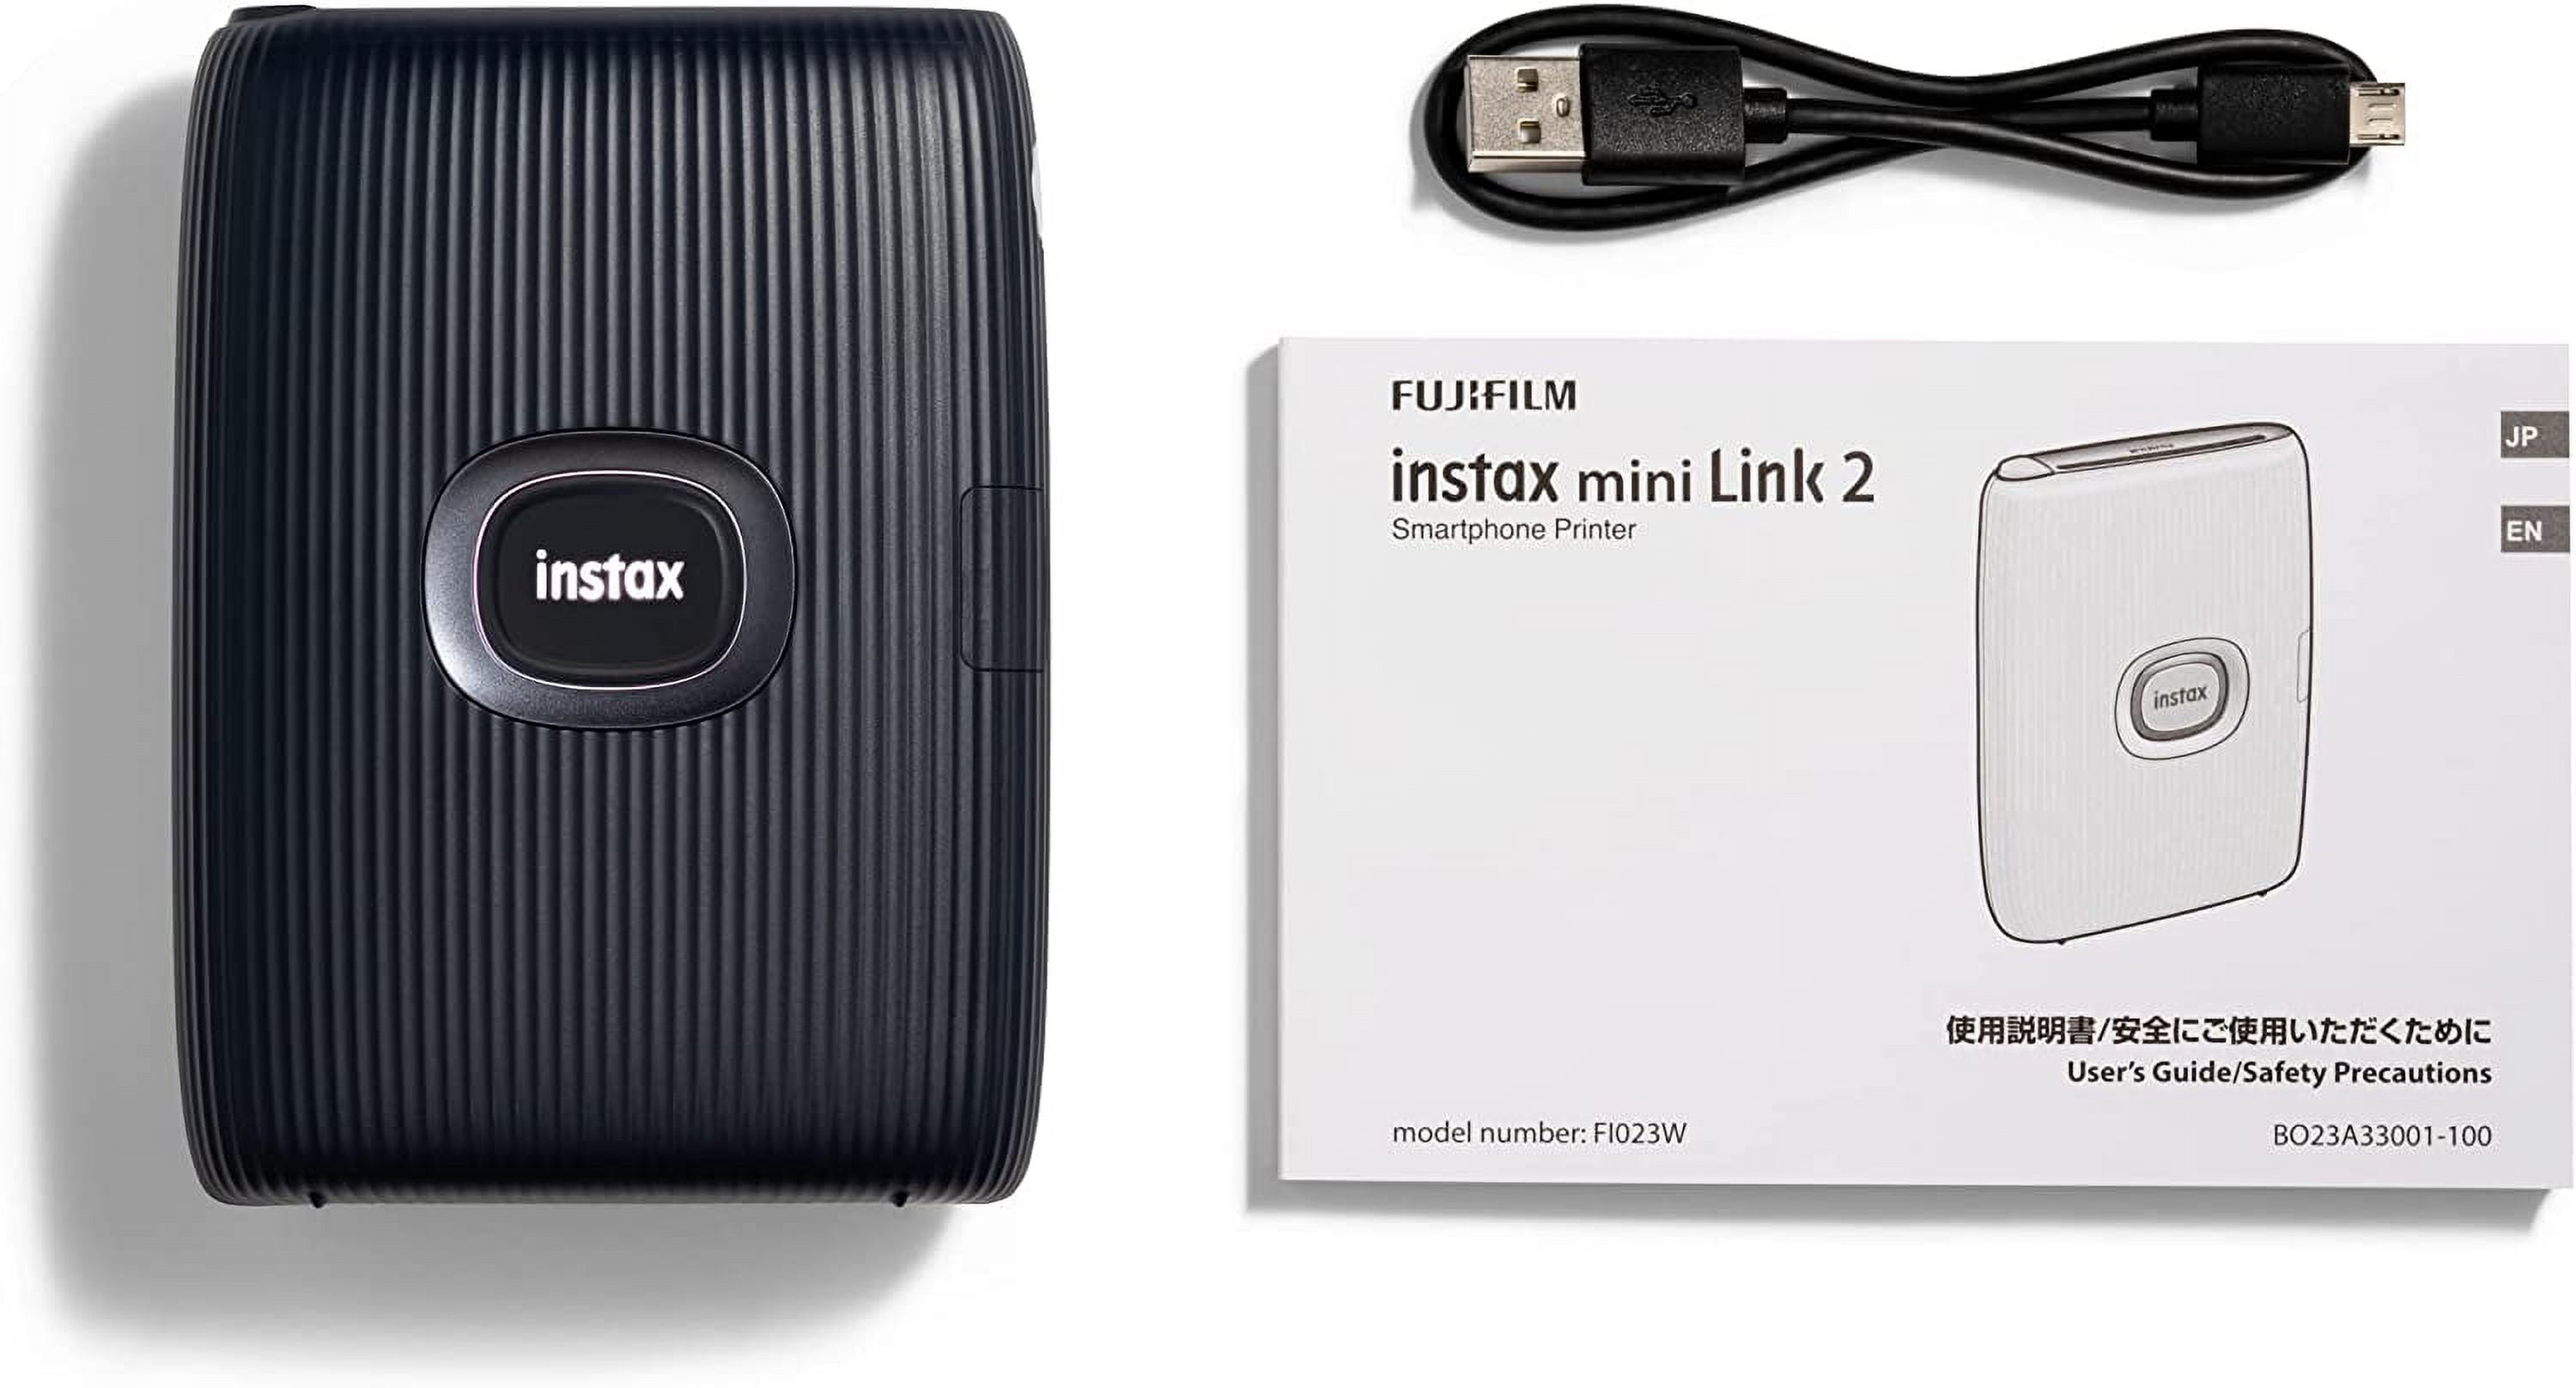 FUJIFILM INSTAX MINI LINK 2 Smartphone Printer 16767208 B&H